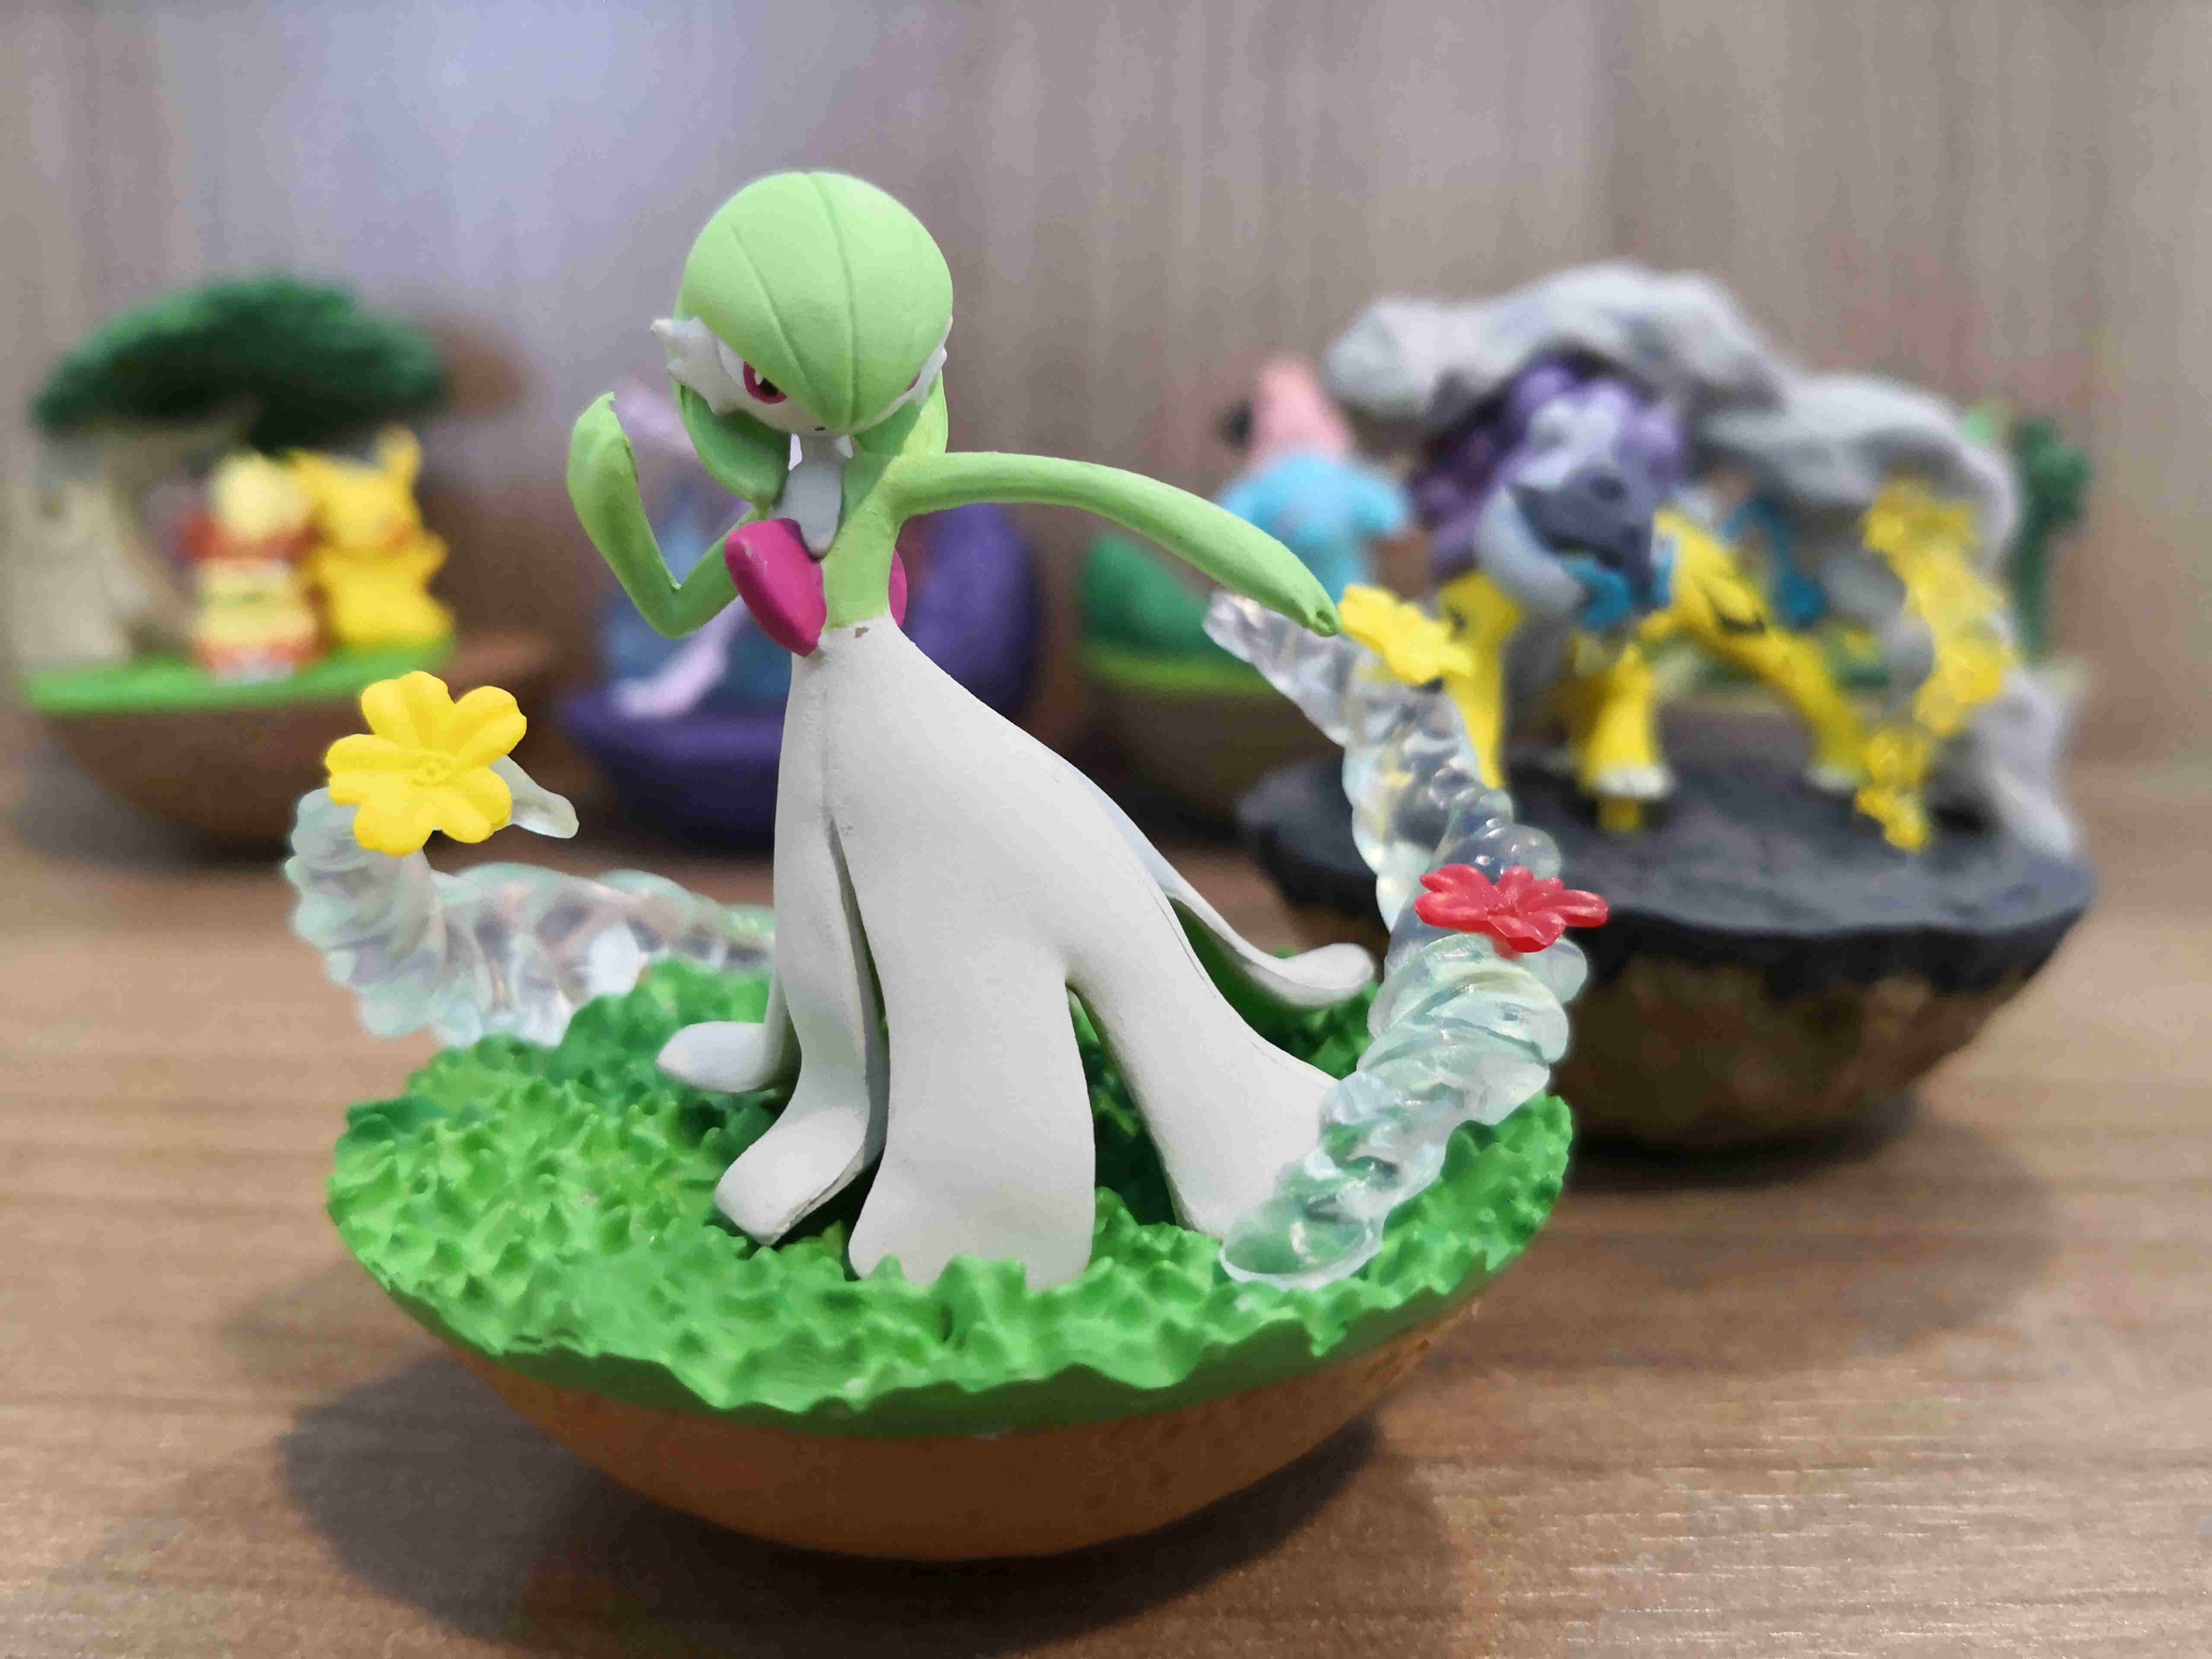 A Statue of Gardevoir Pokemon on a Green Land.